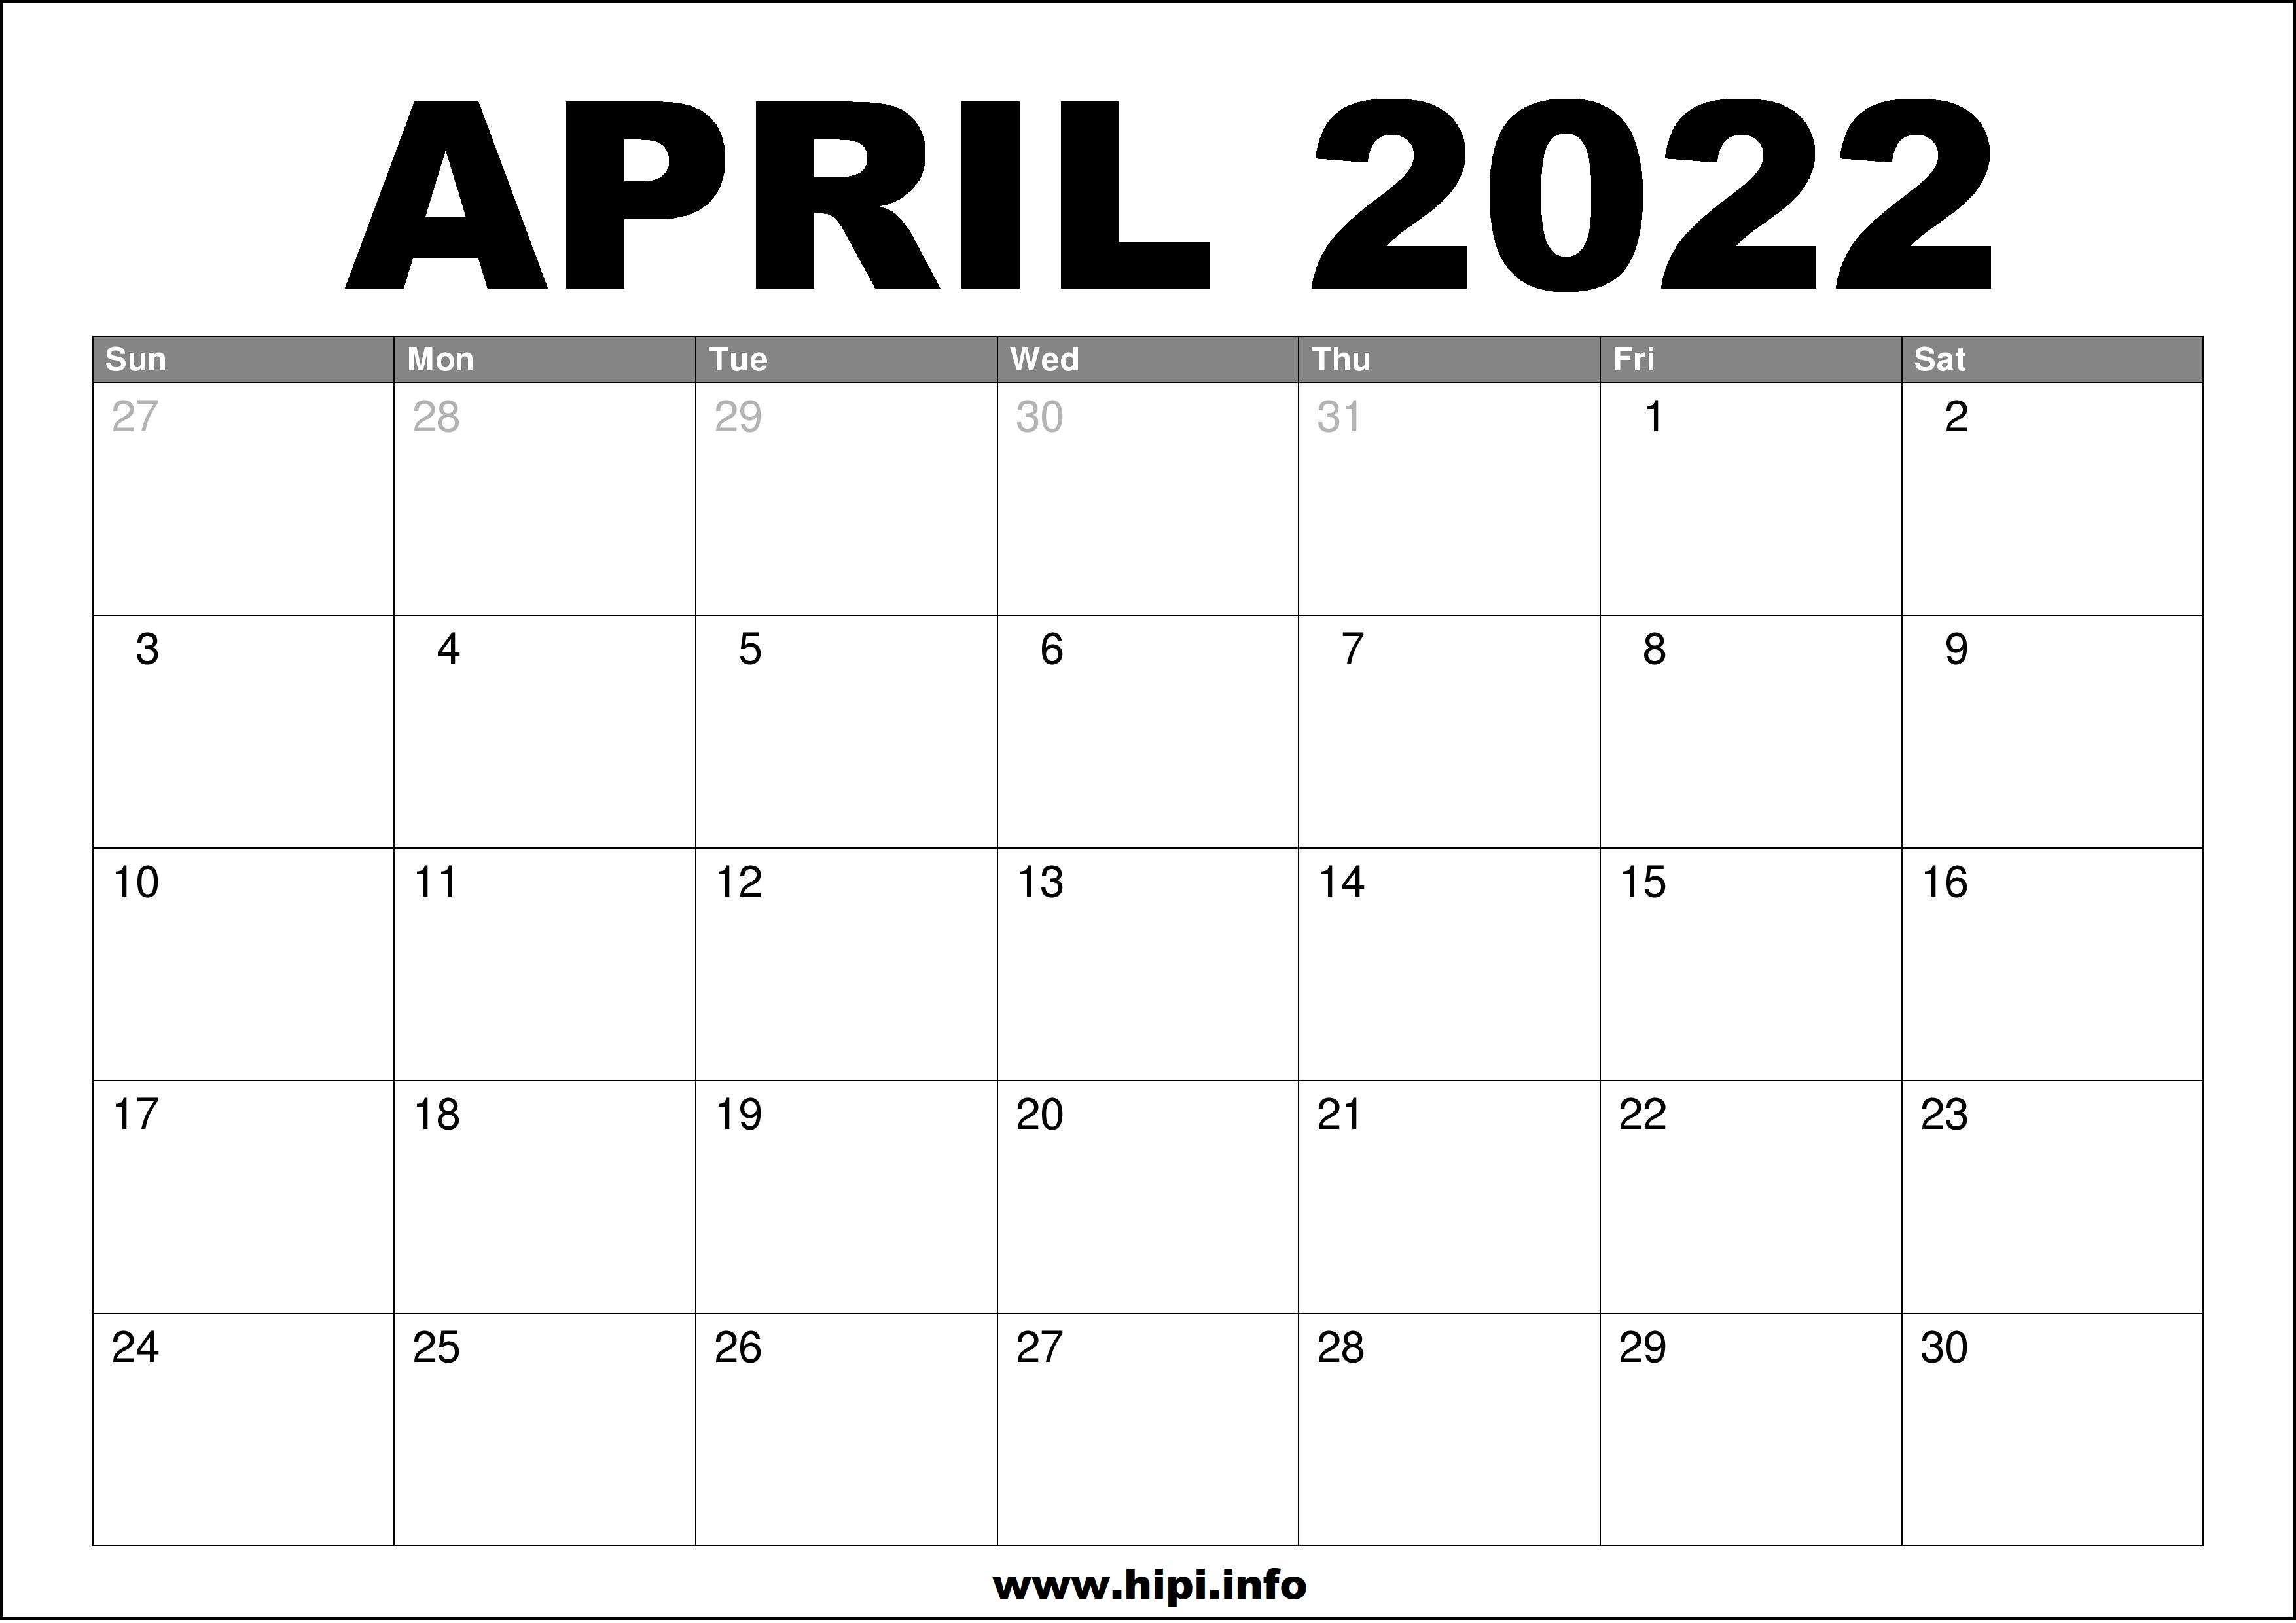 Free April 2022 Calendar April 2022 Calendar Printable Free - Hipi.info | Calendars Printable Free